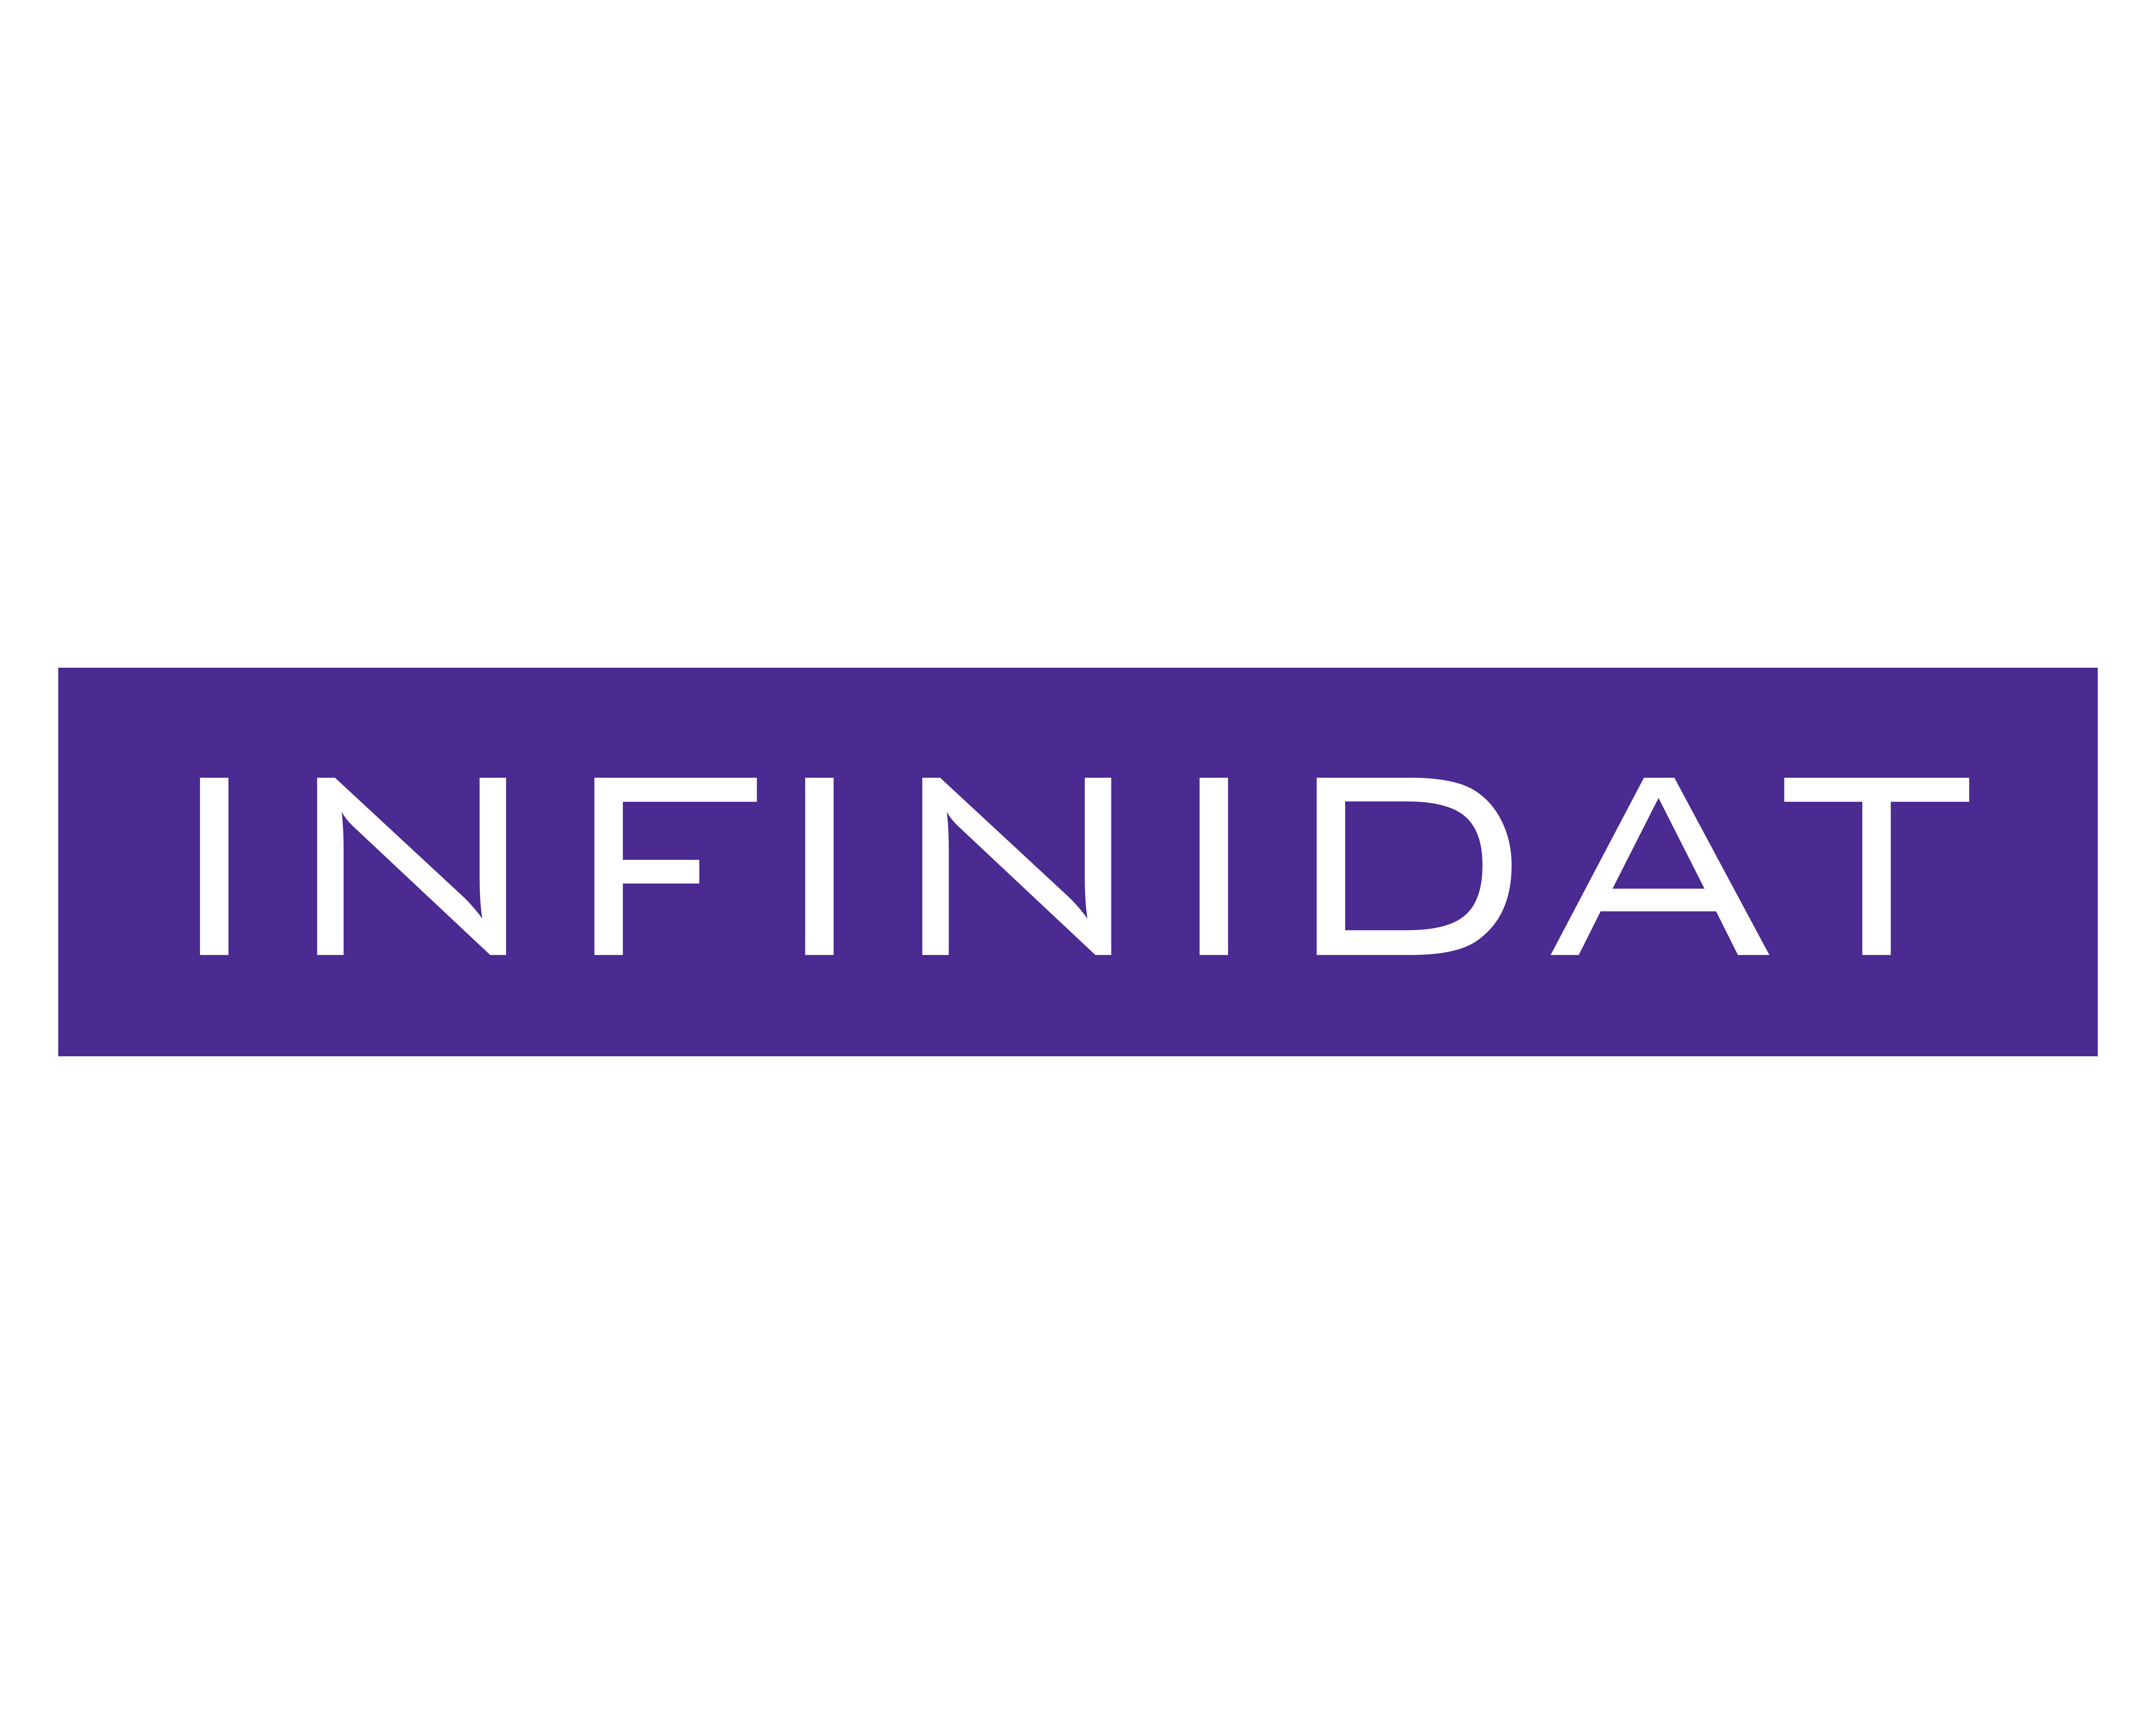 Infinidat